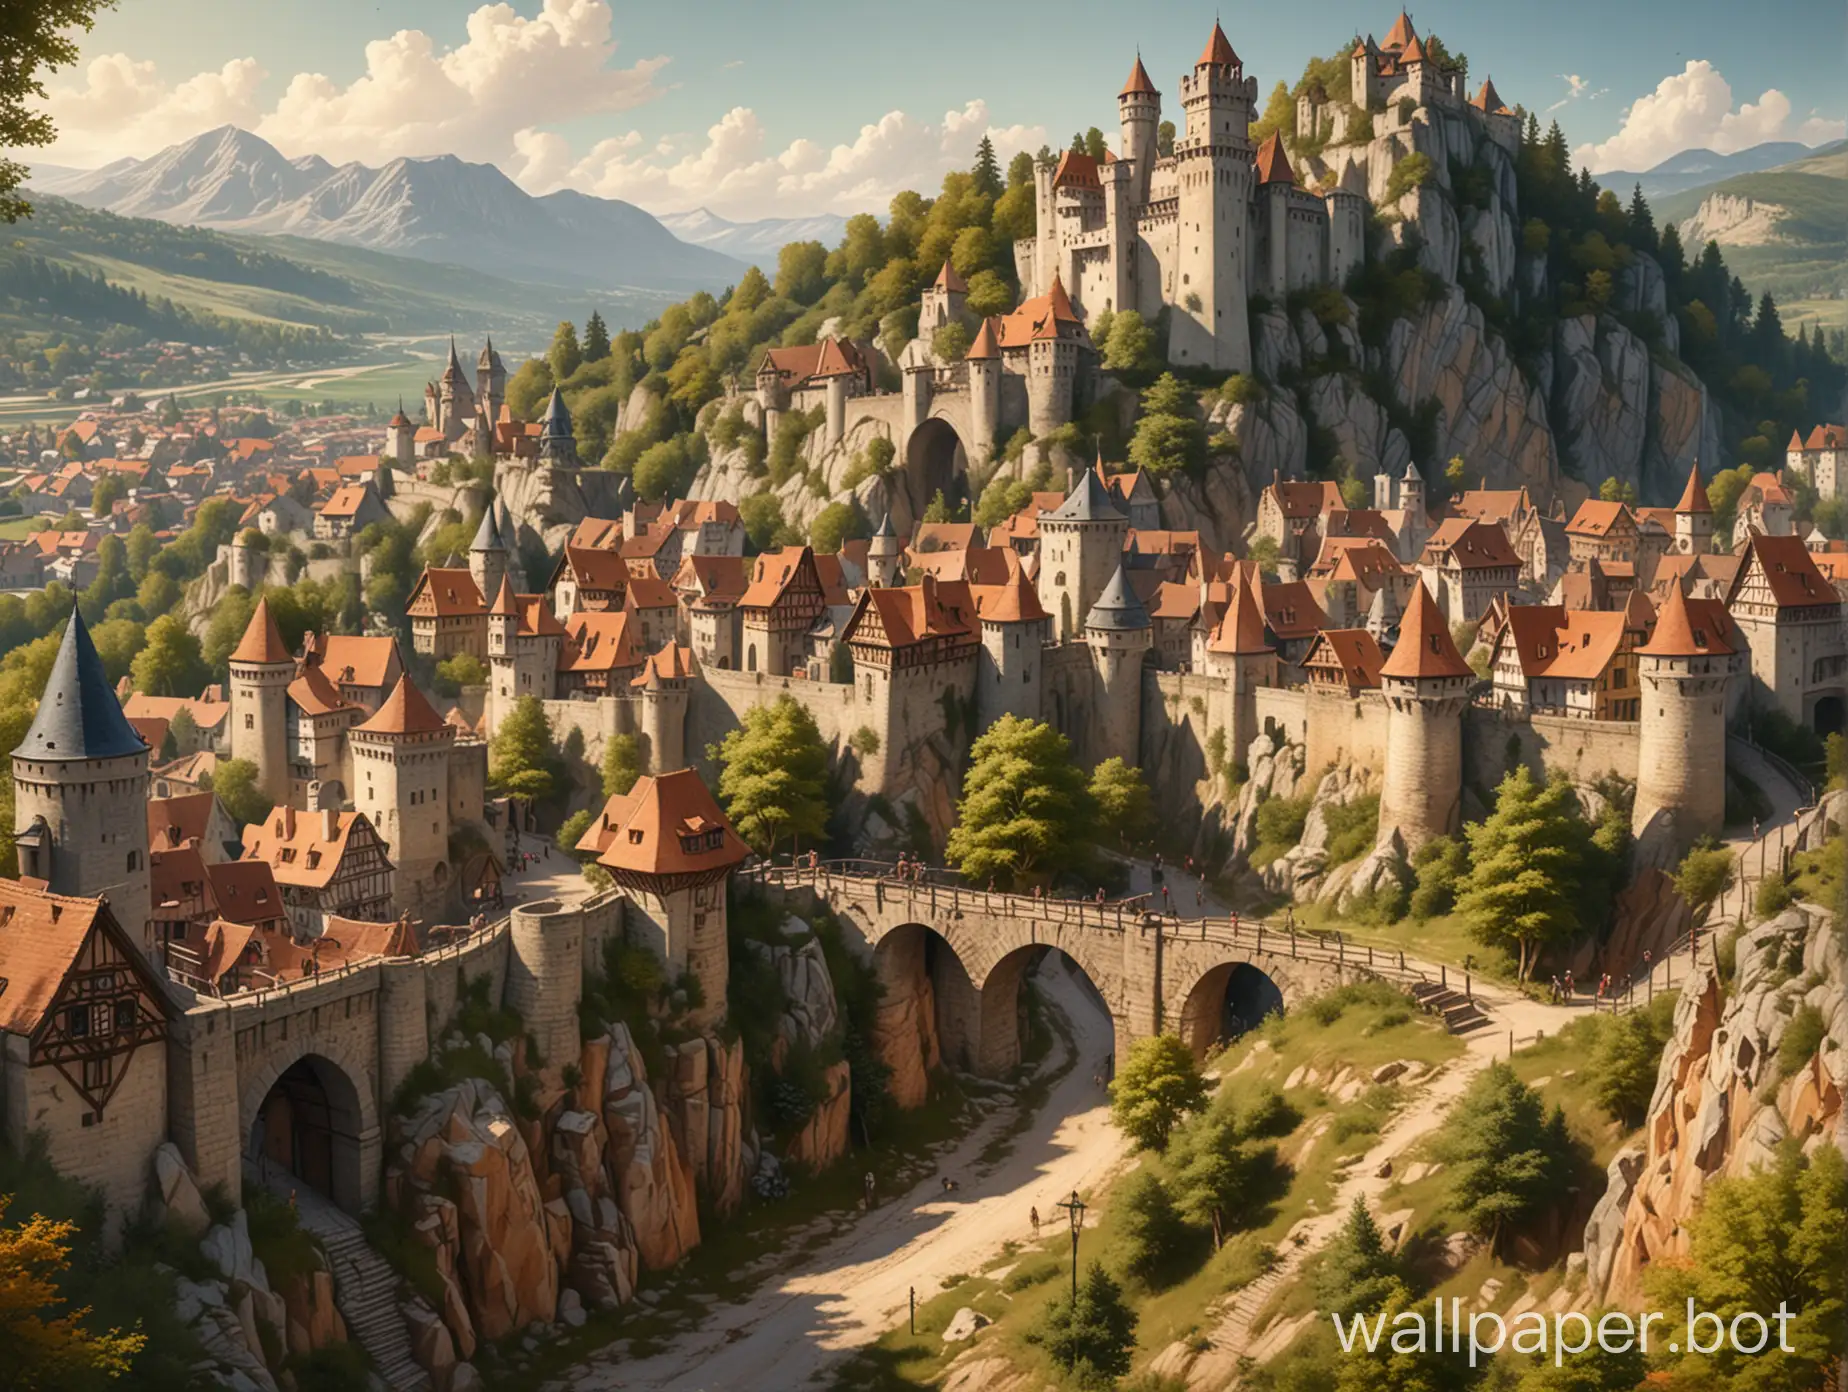 Medieval-Fantasy-Village-with-Mountain-Landscape-and-Drawbridge-Entrance